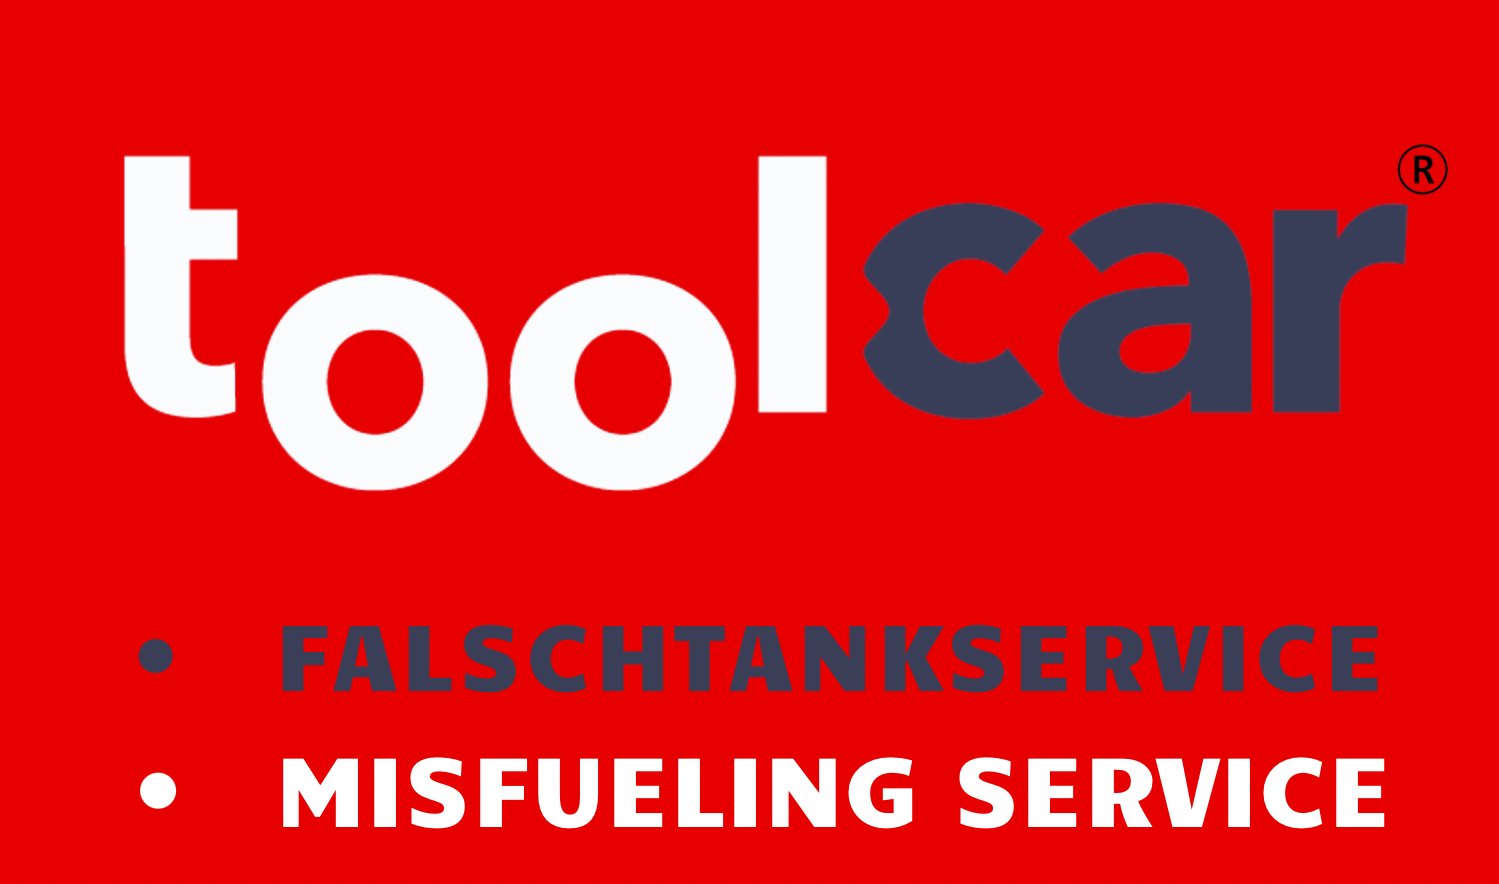 Toolcar Falschtankservice Logo Neu